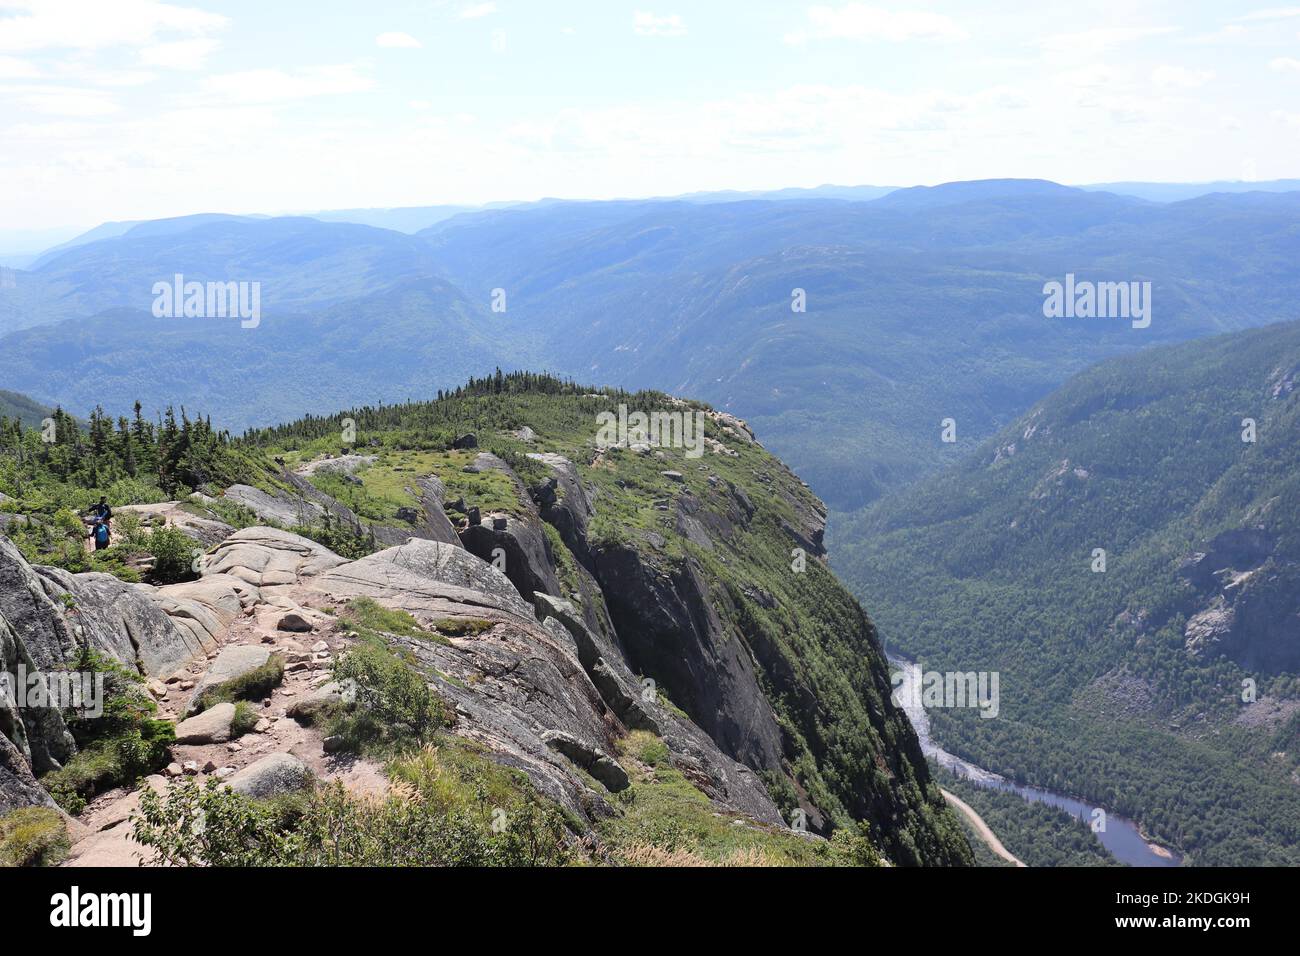 Gran paisaje cortado por una montaña en la cima de l'Acropole des Draveurs (Montagne des Érables), Foto de archivo Foto de stock